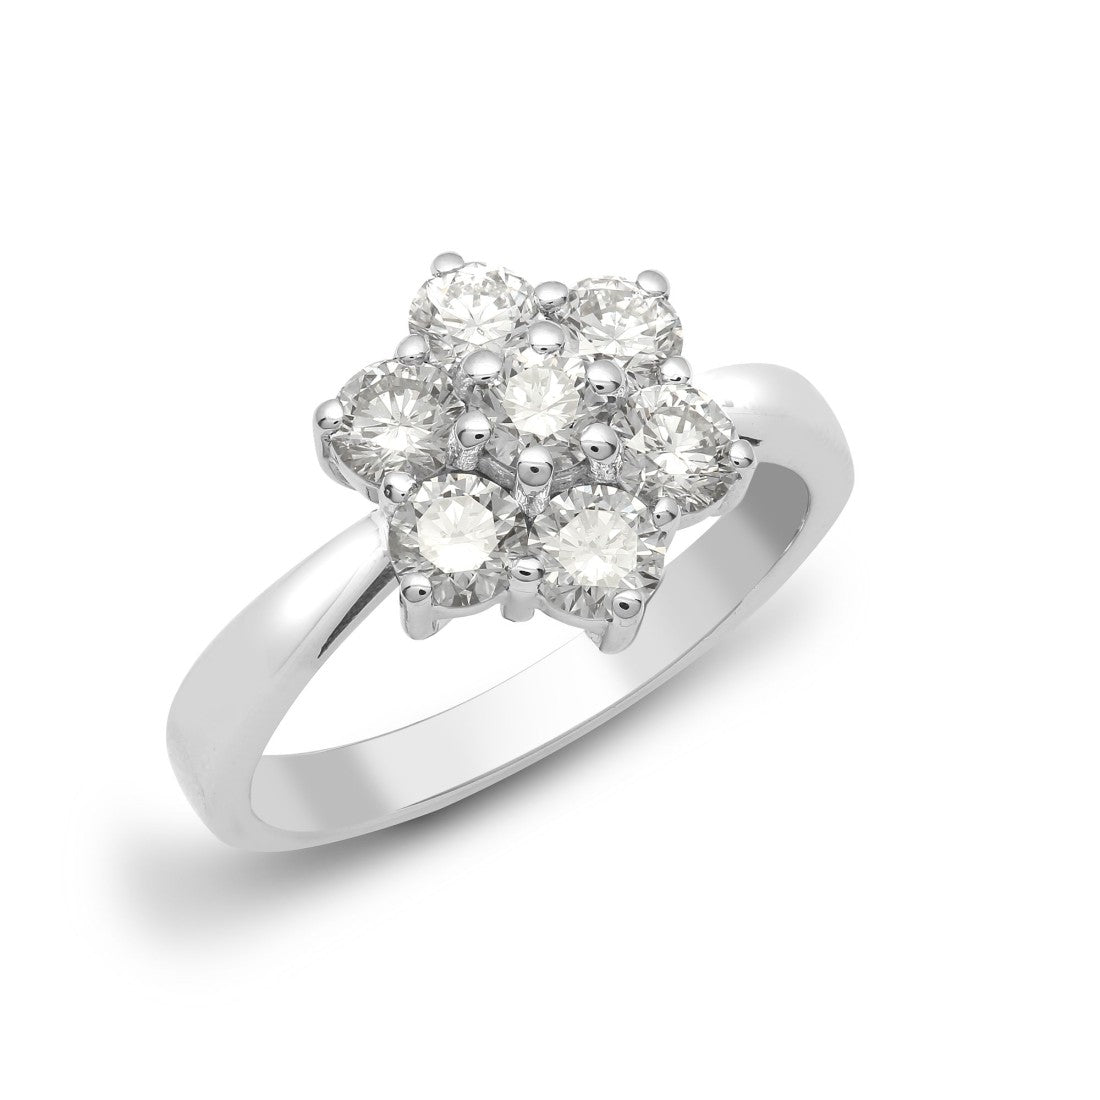 18ct white gold flower cluster diamond engagement ring